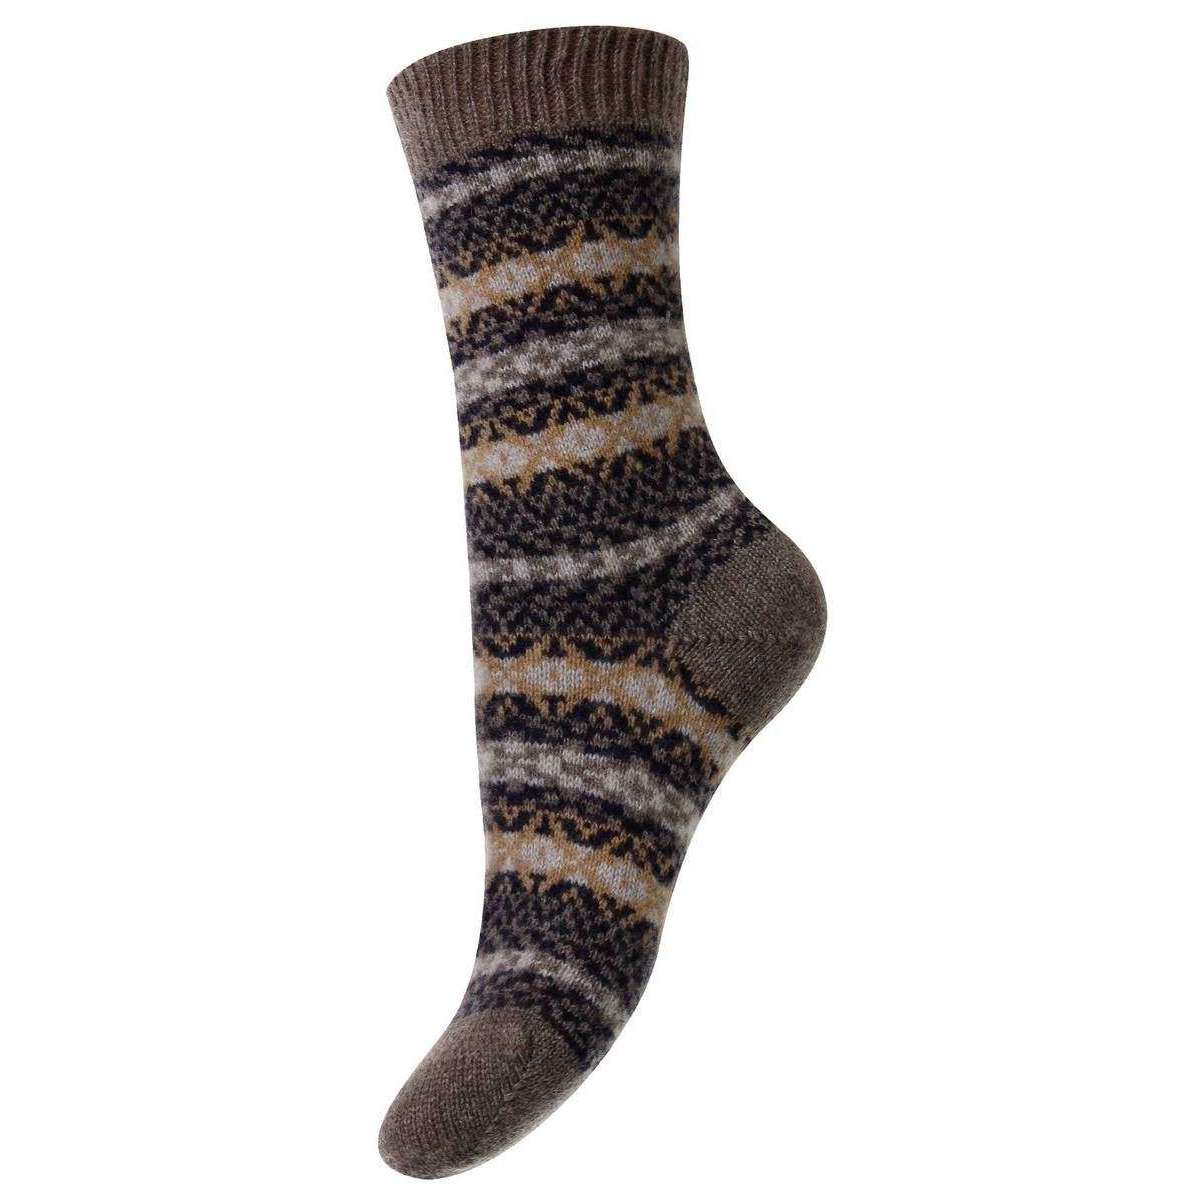 Pantherella Skye Traditional Fair Isle Cashmere Socks - Mink Melange Grey